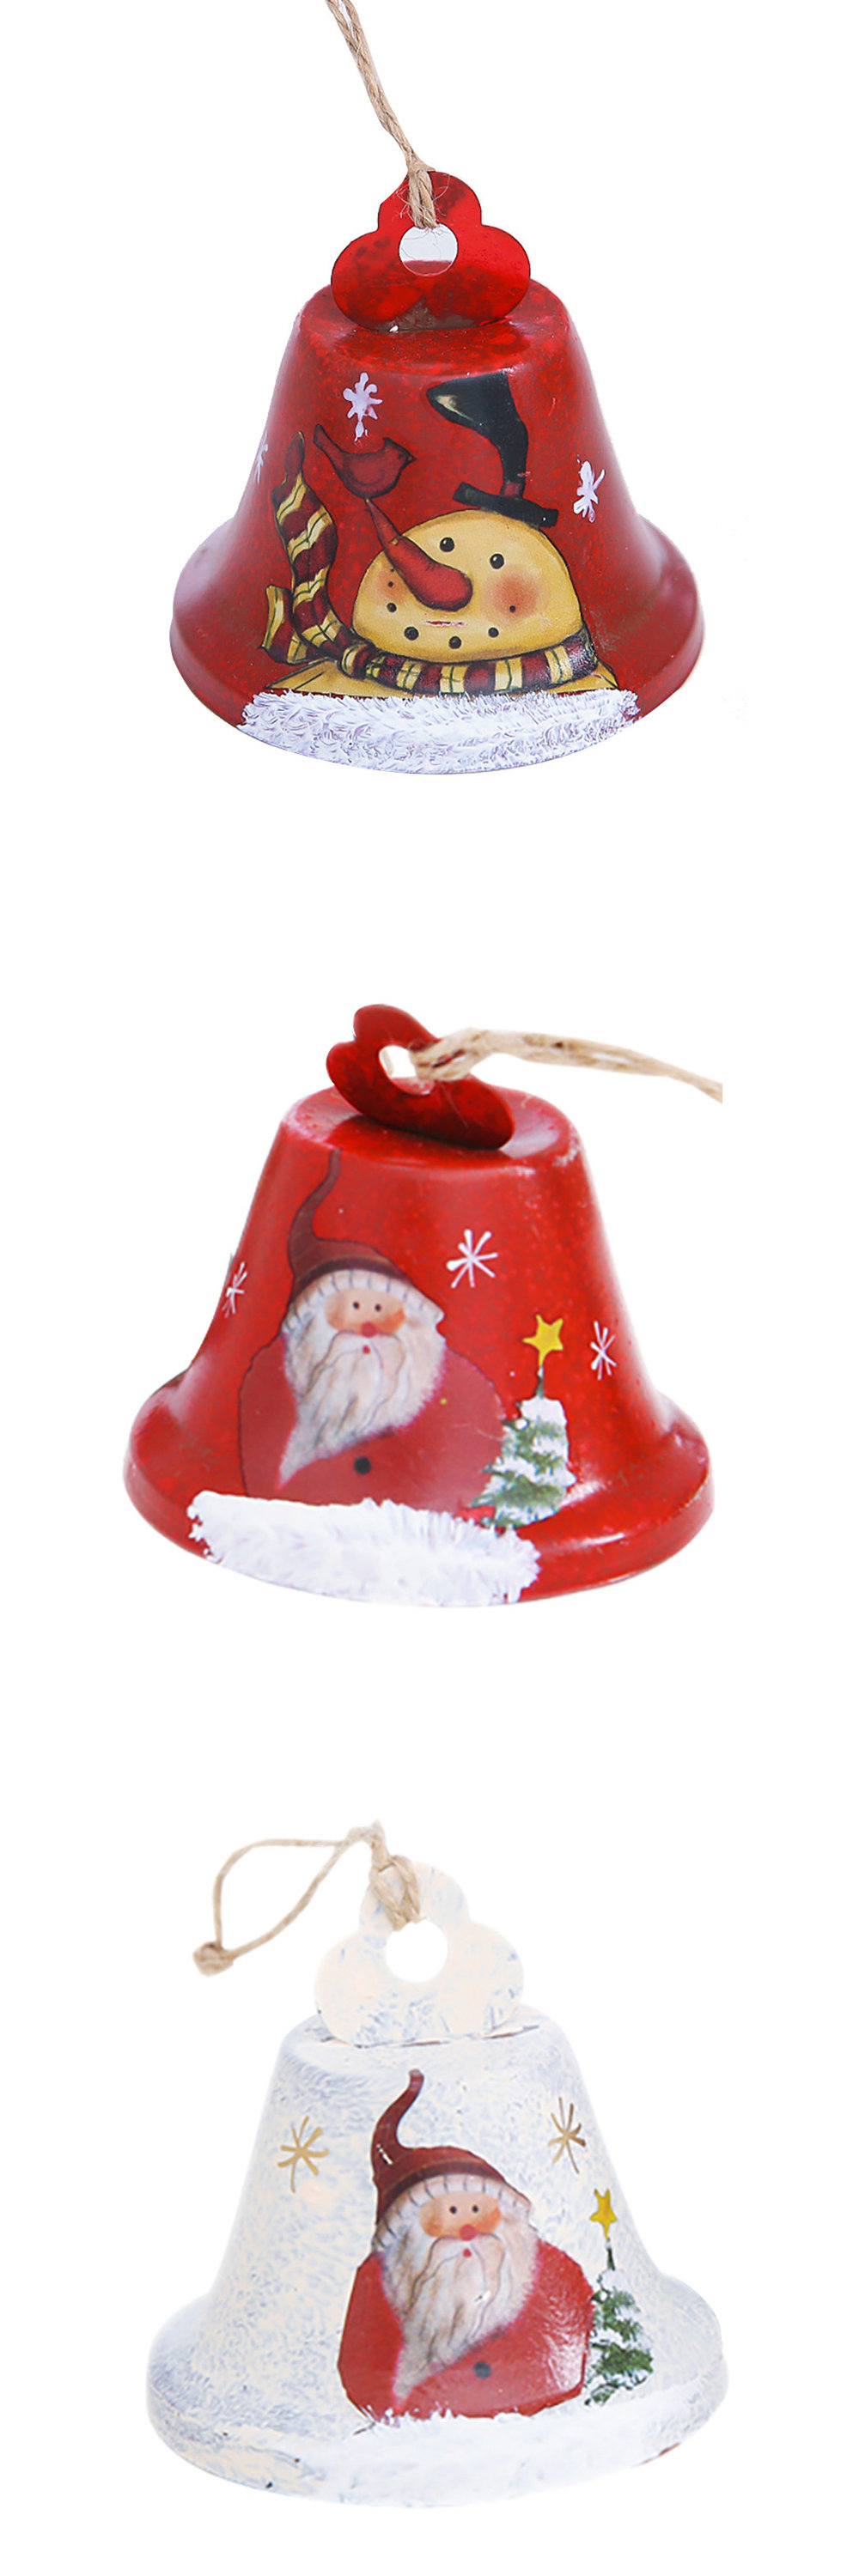 Jingle Bell Christmas Ornament from Apollo Box